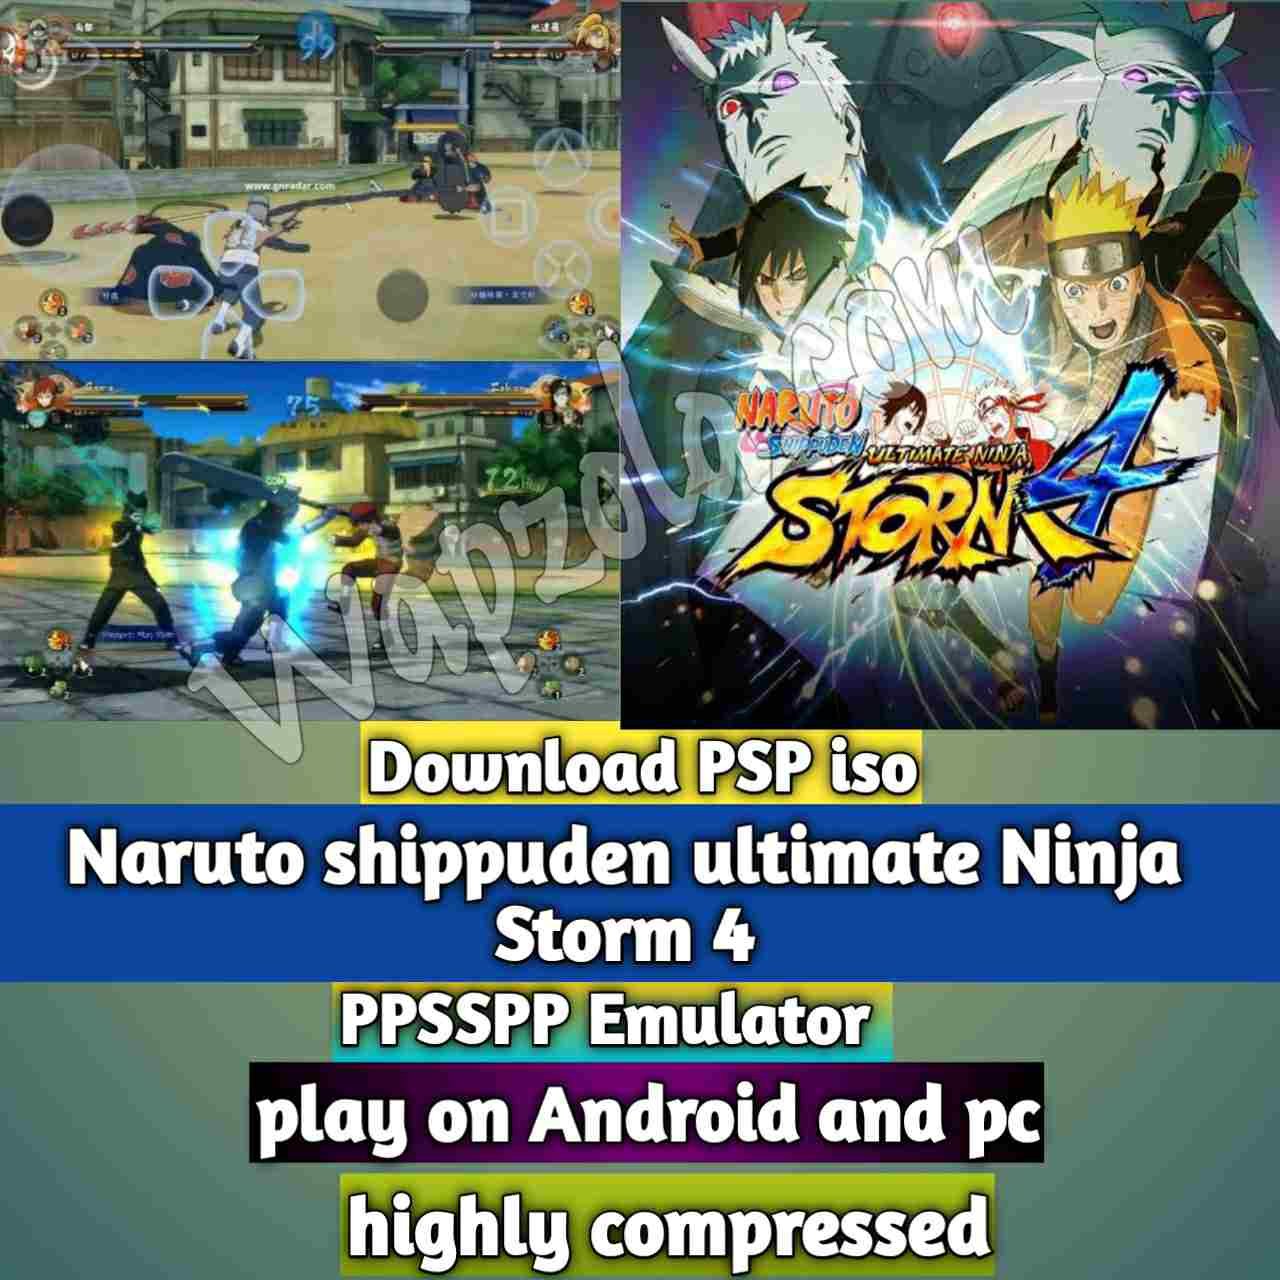 Download] Naruto shippuden ultimate Ninja Storm 20 Mod iso ppsspp ...